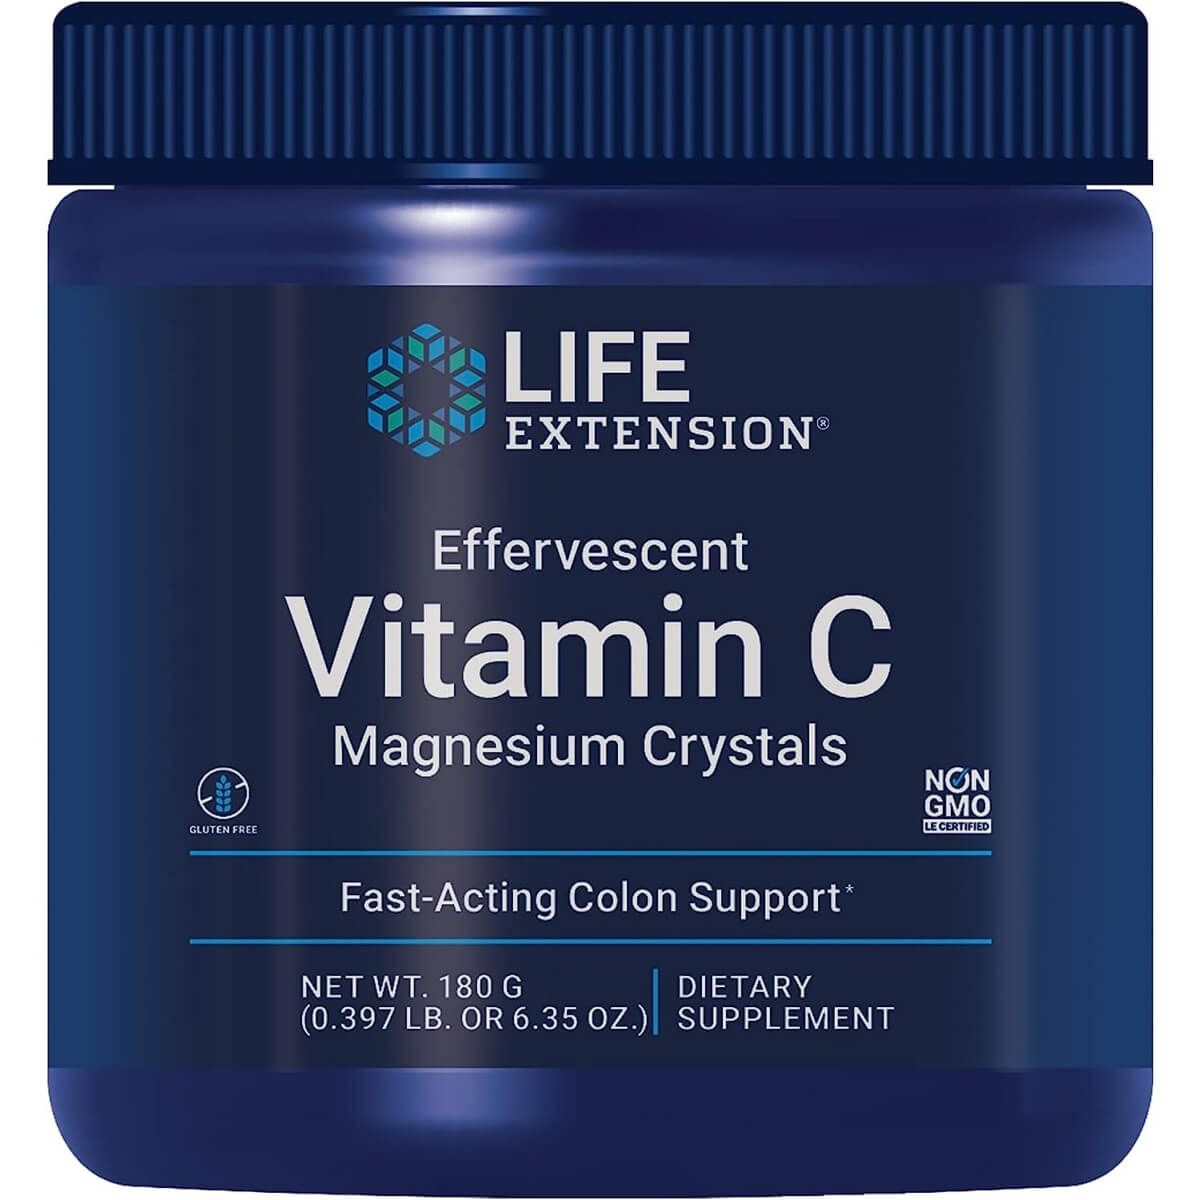 Photos - Vitamins & Minerals Life Extension Effervescent Vitamin C Magnesium Crystals 180 grams PBW-P35 